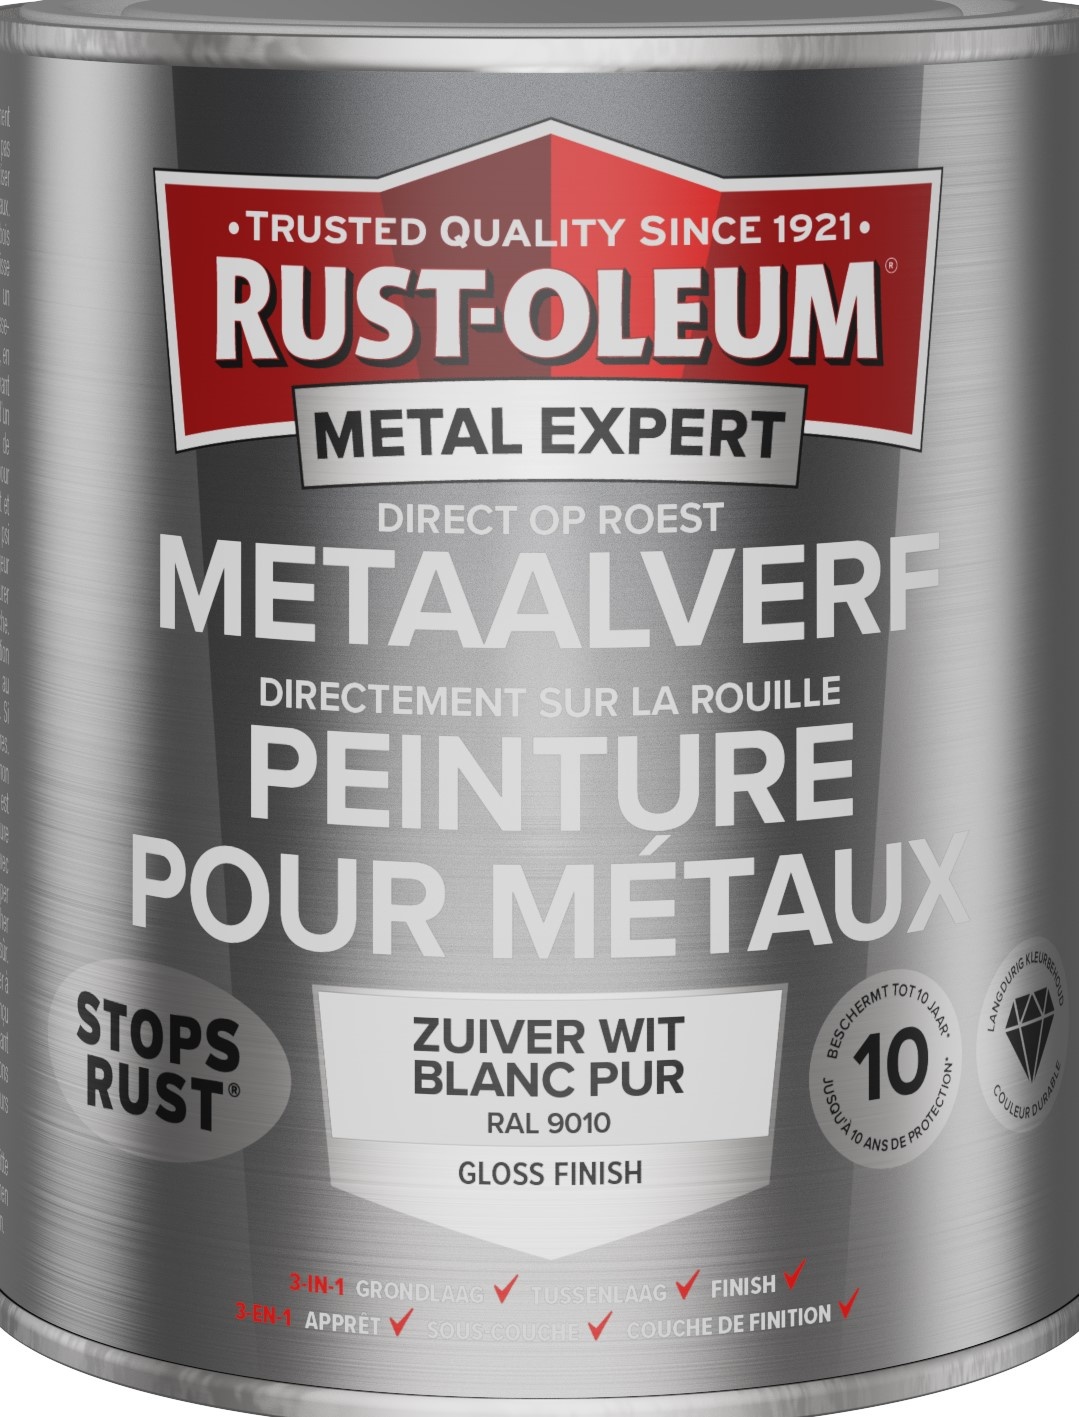 rust-oleum metal expert metaalverf gloss ral 9010 0.4 ltr spuitbus